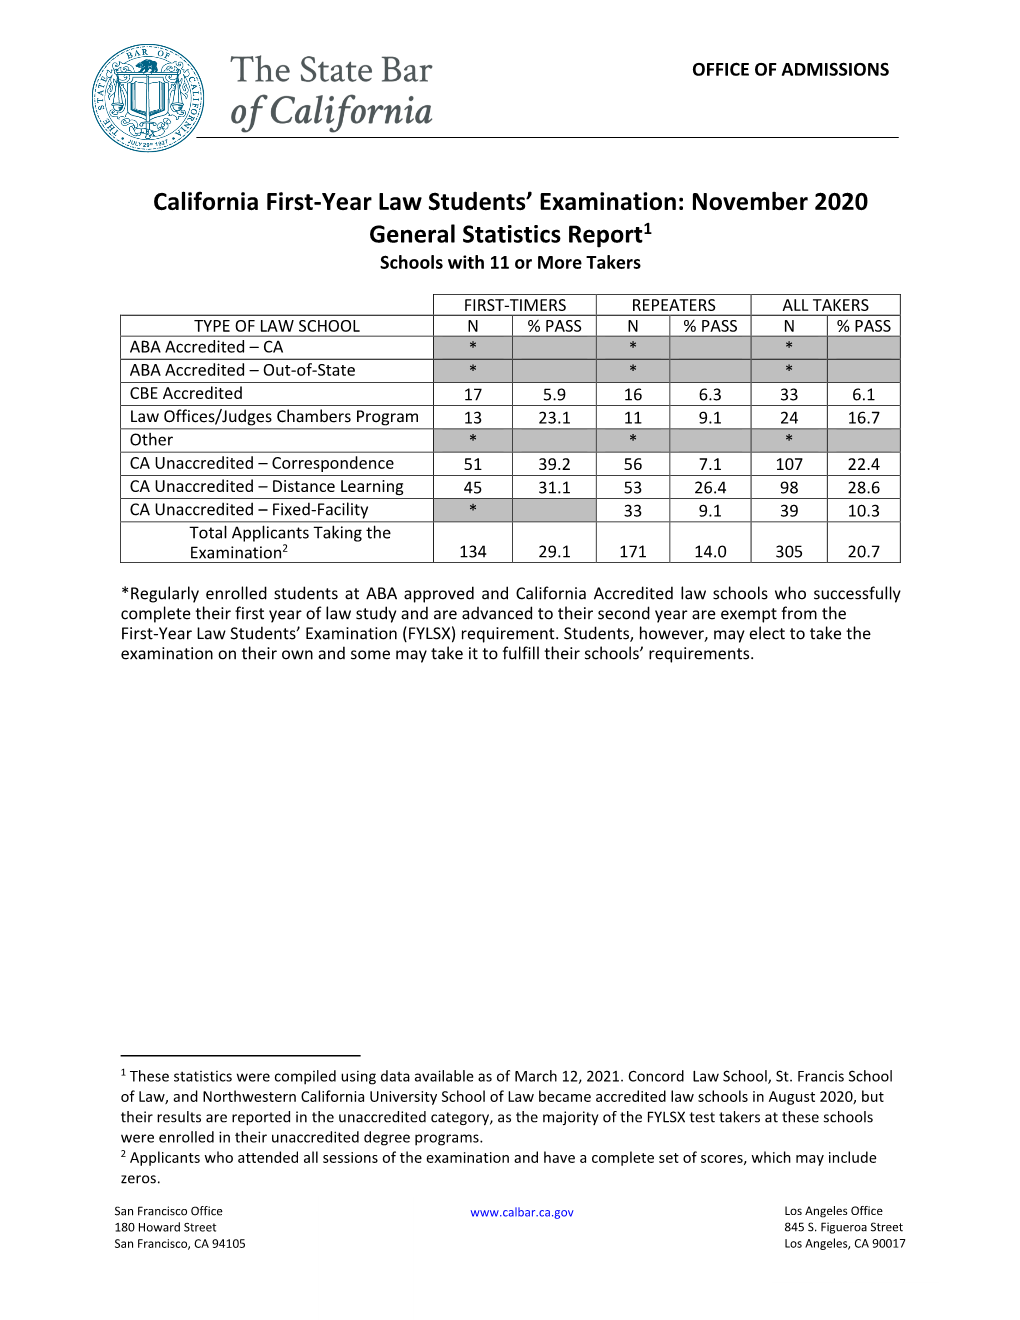 First-Year Law Students' Examination November 2020 Statistics